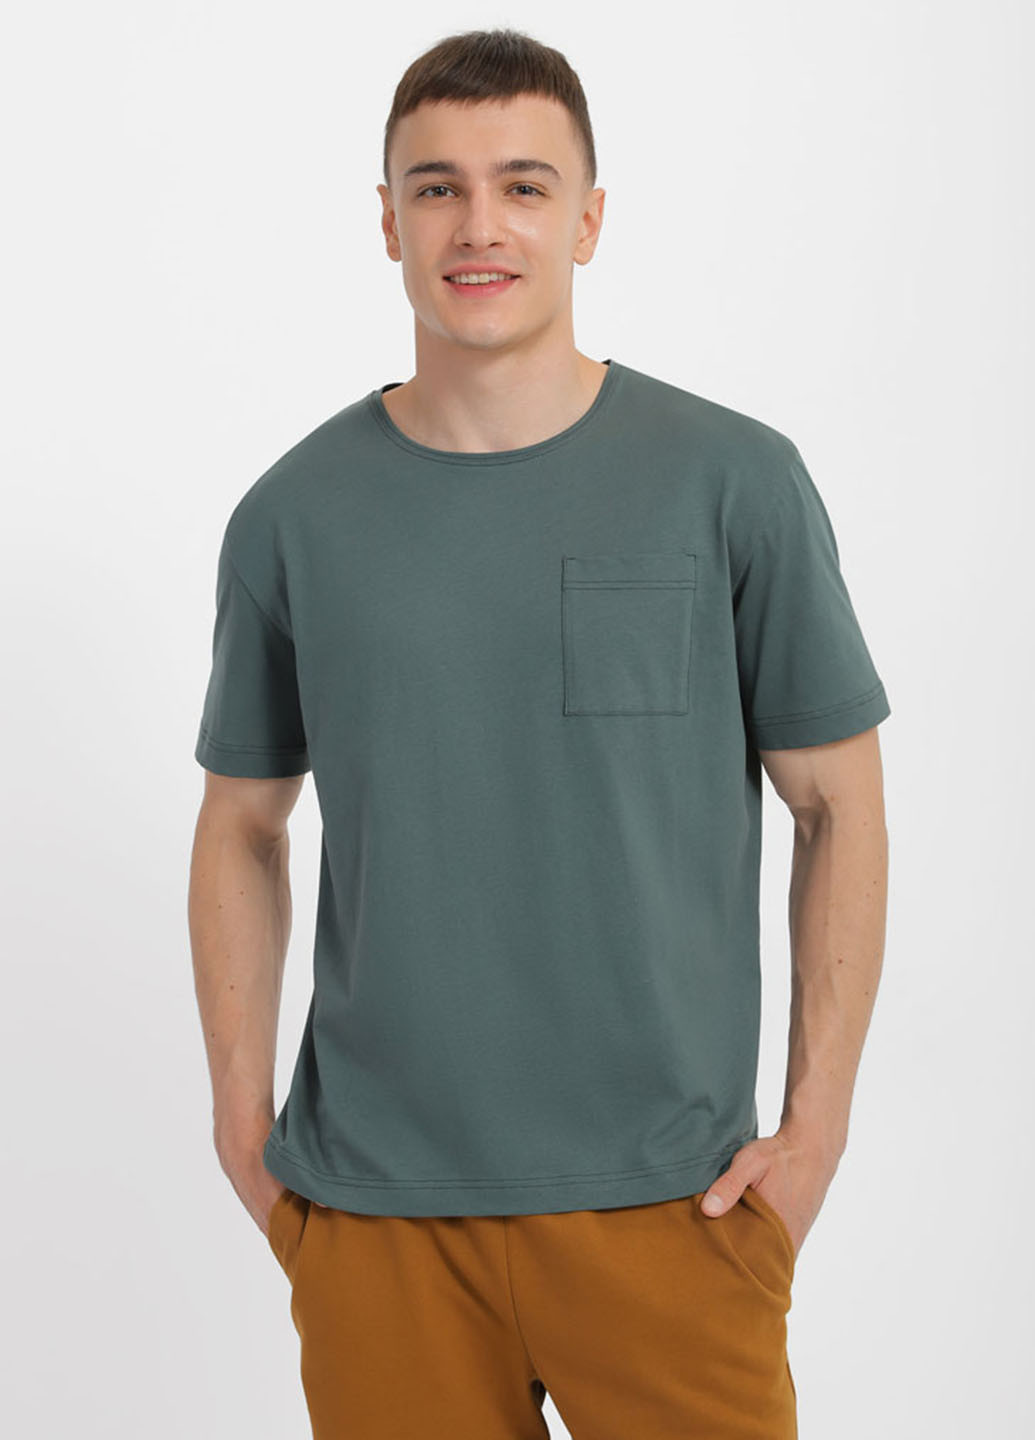 Серо-зеленая футболка Promin